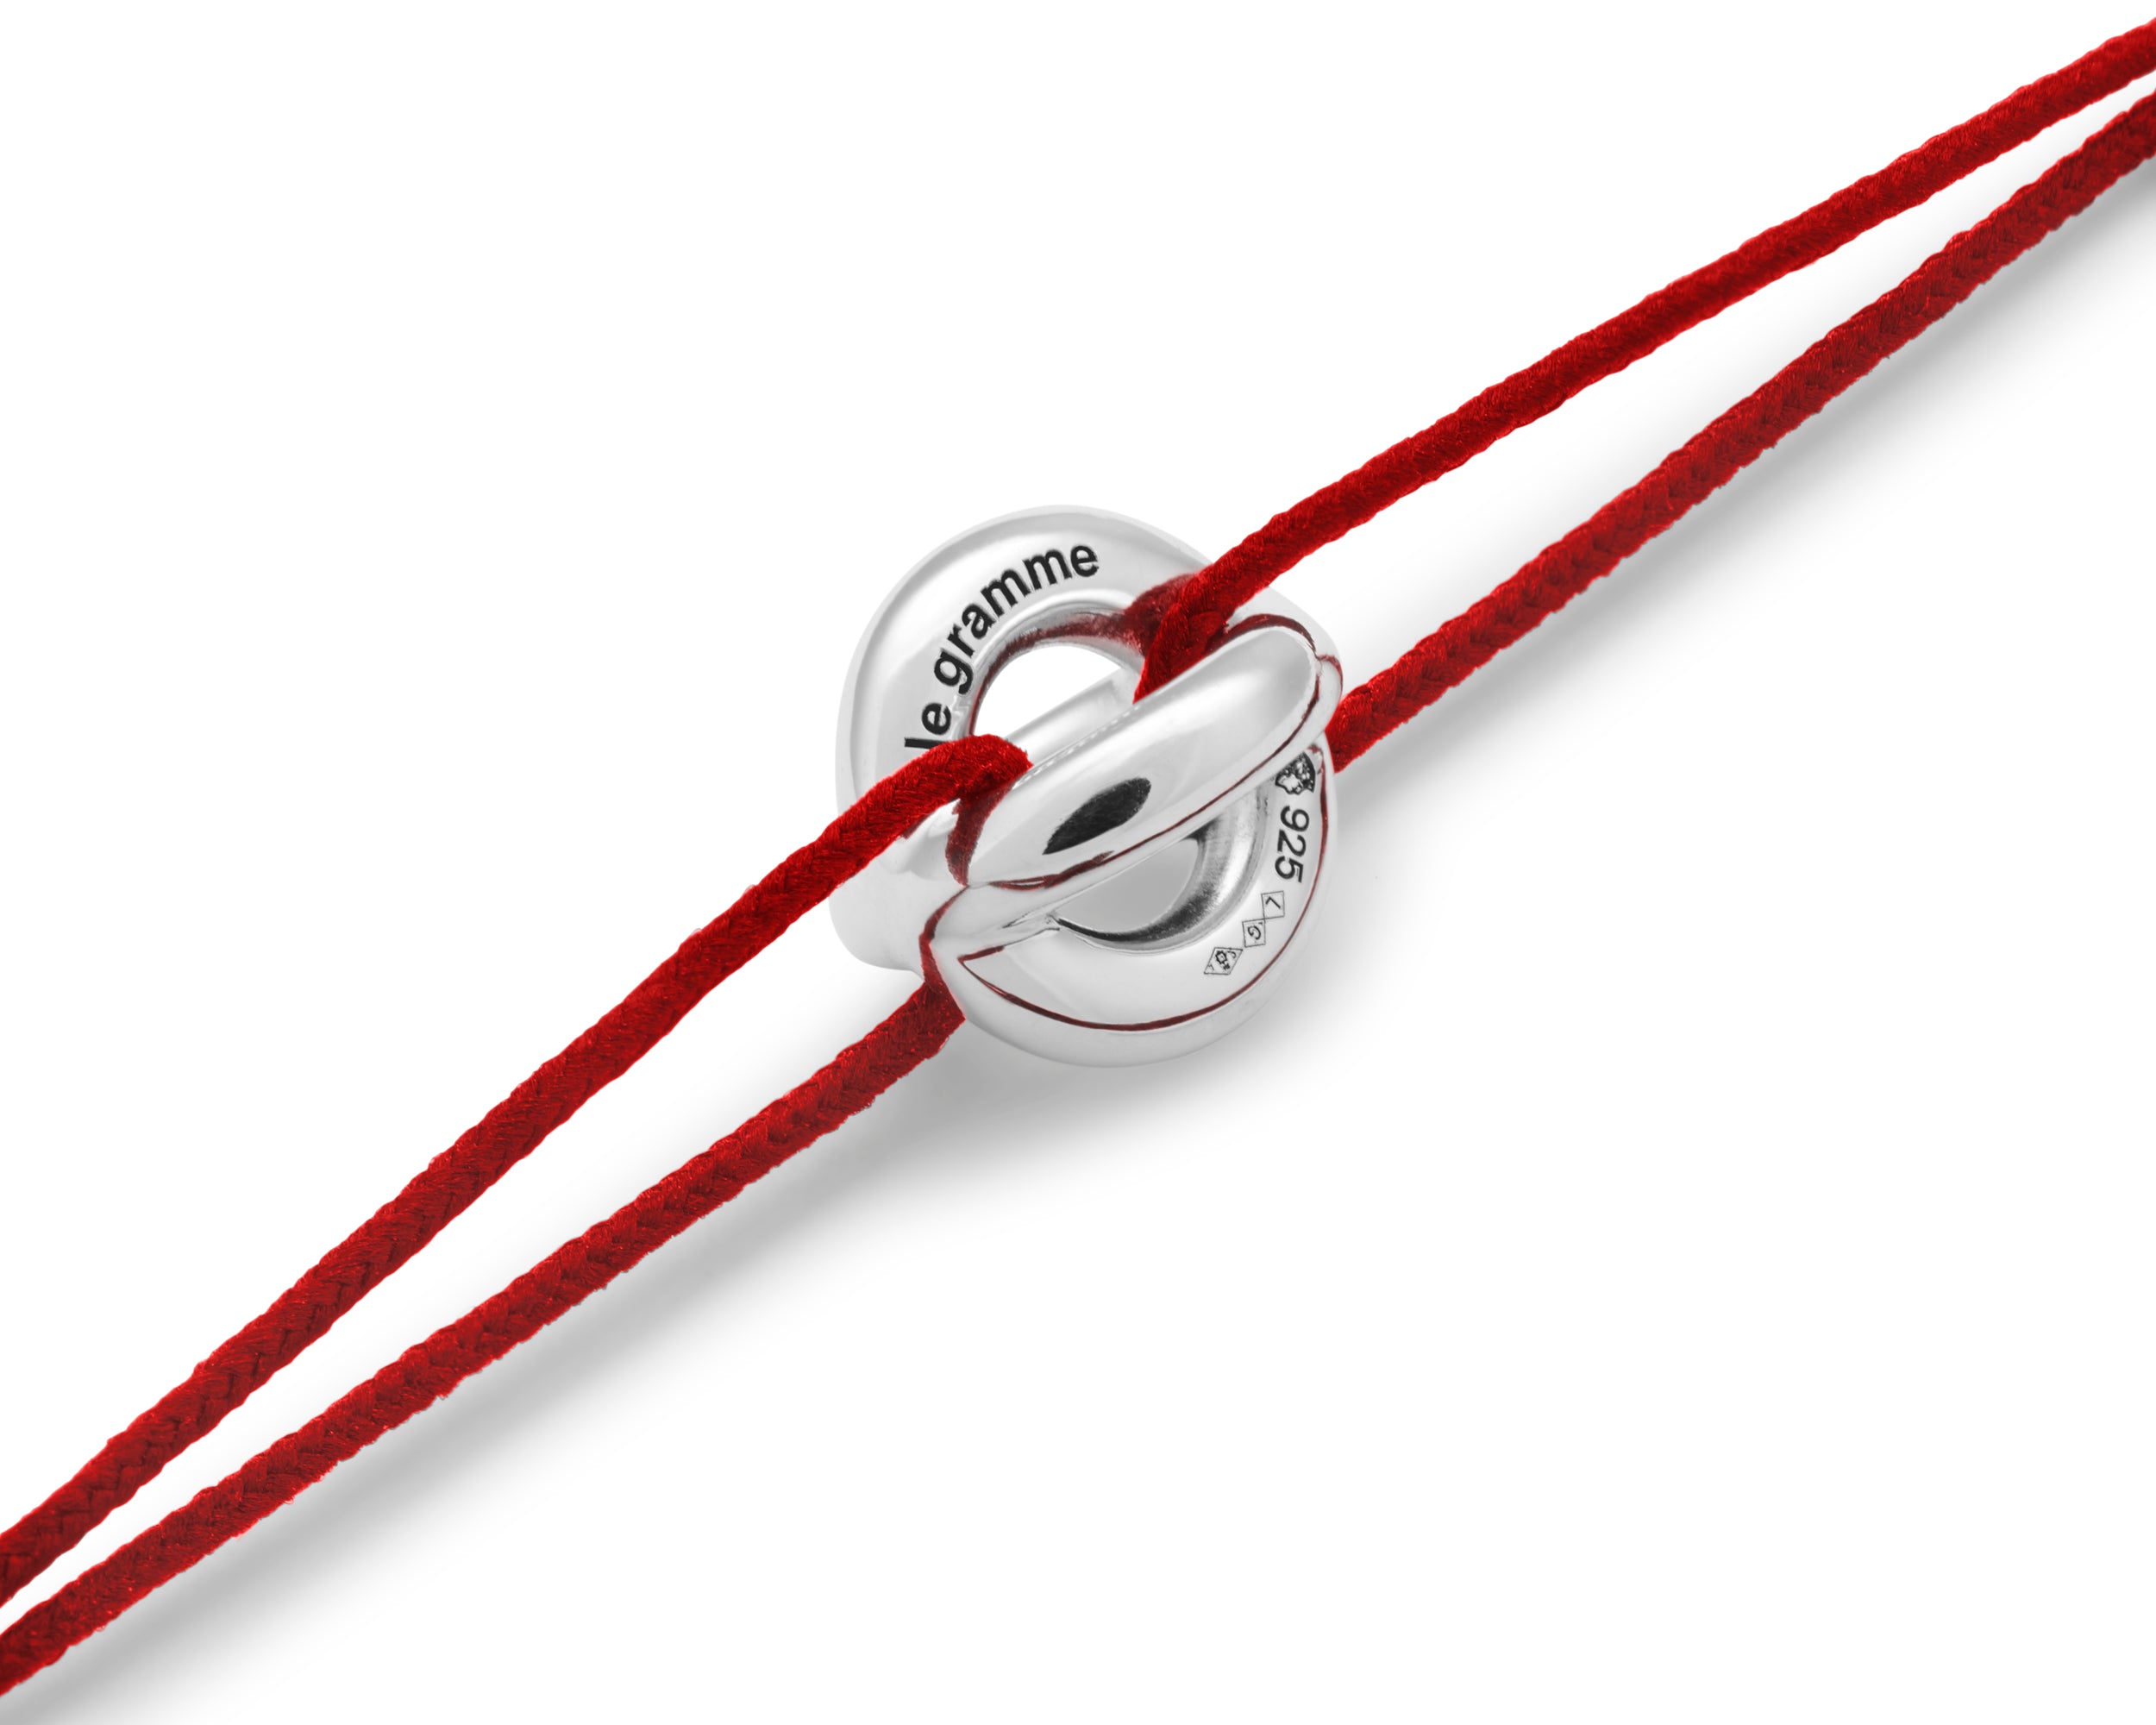 red interlaced cord bracelet le 3g